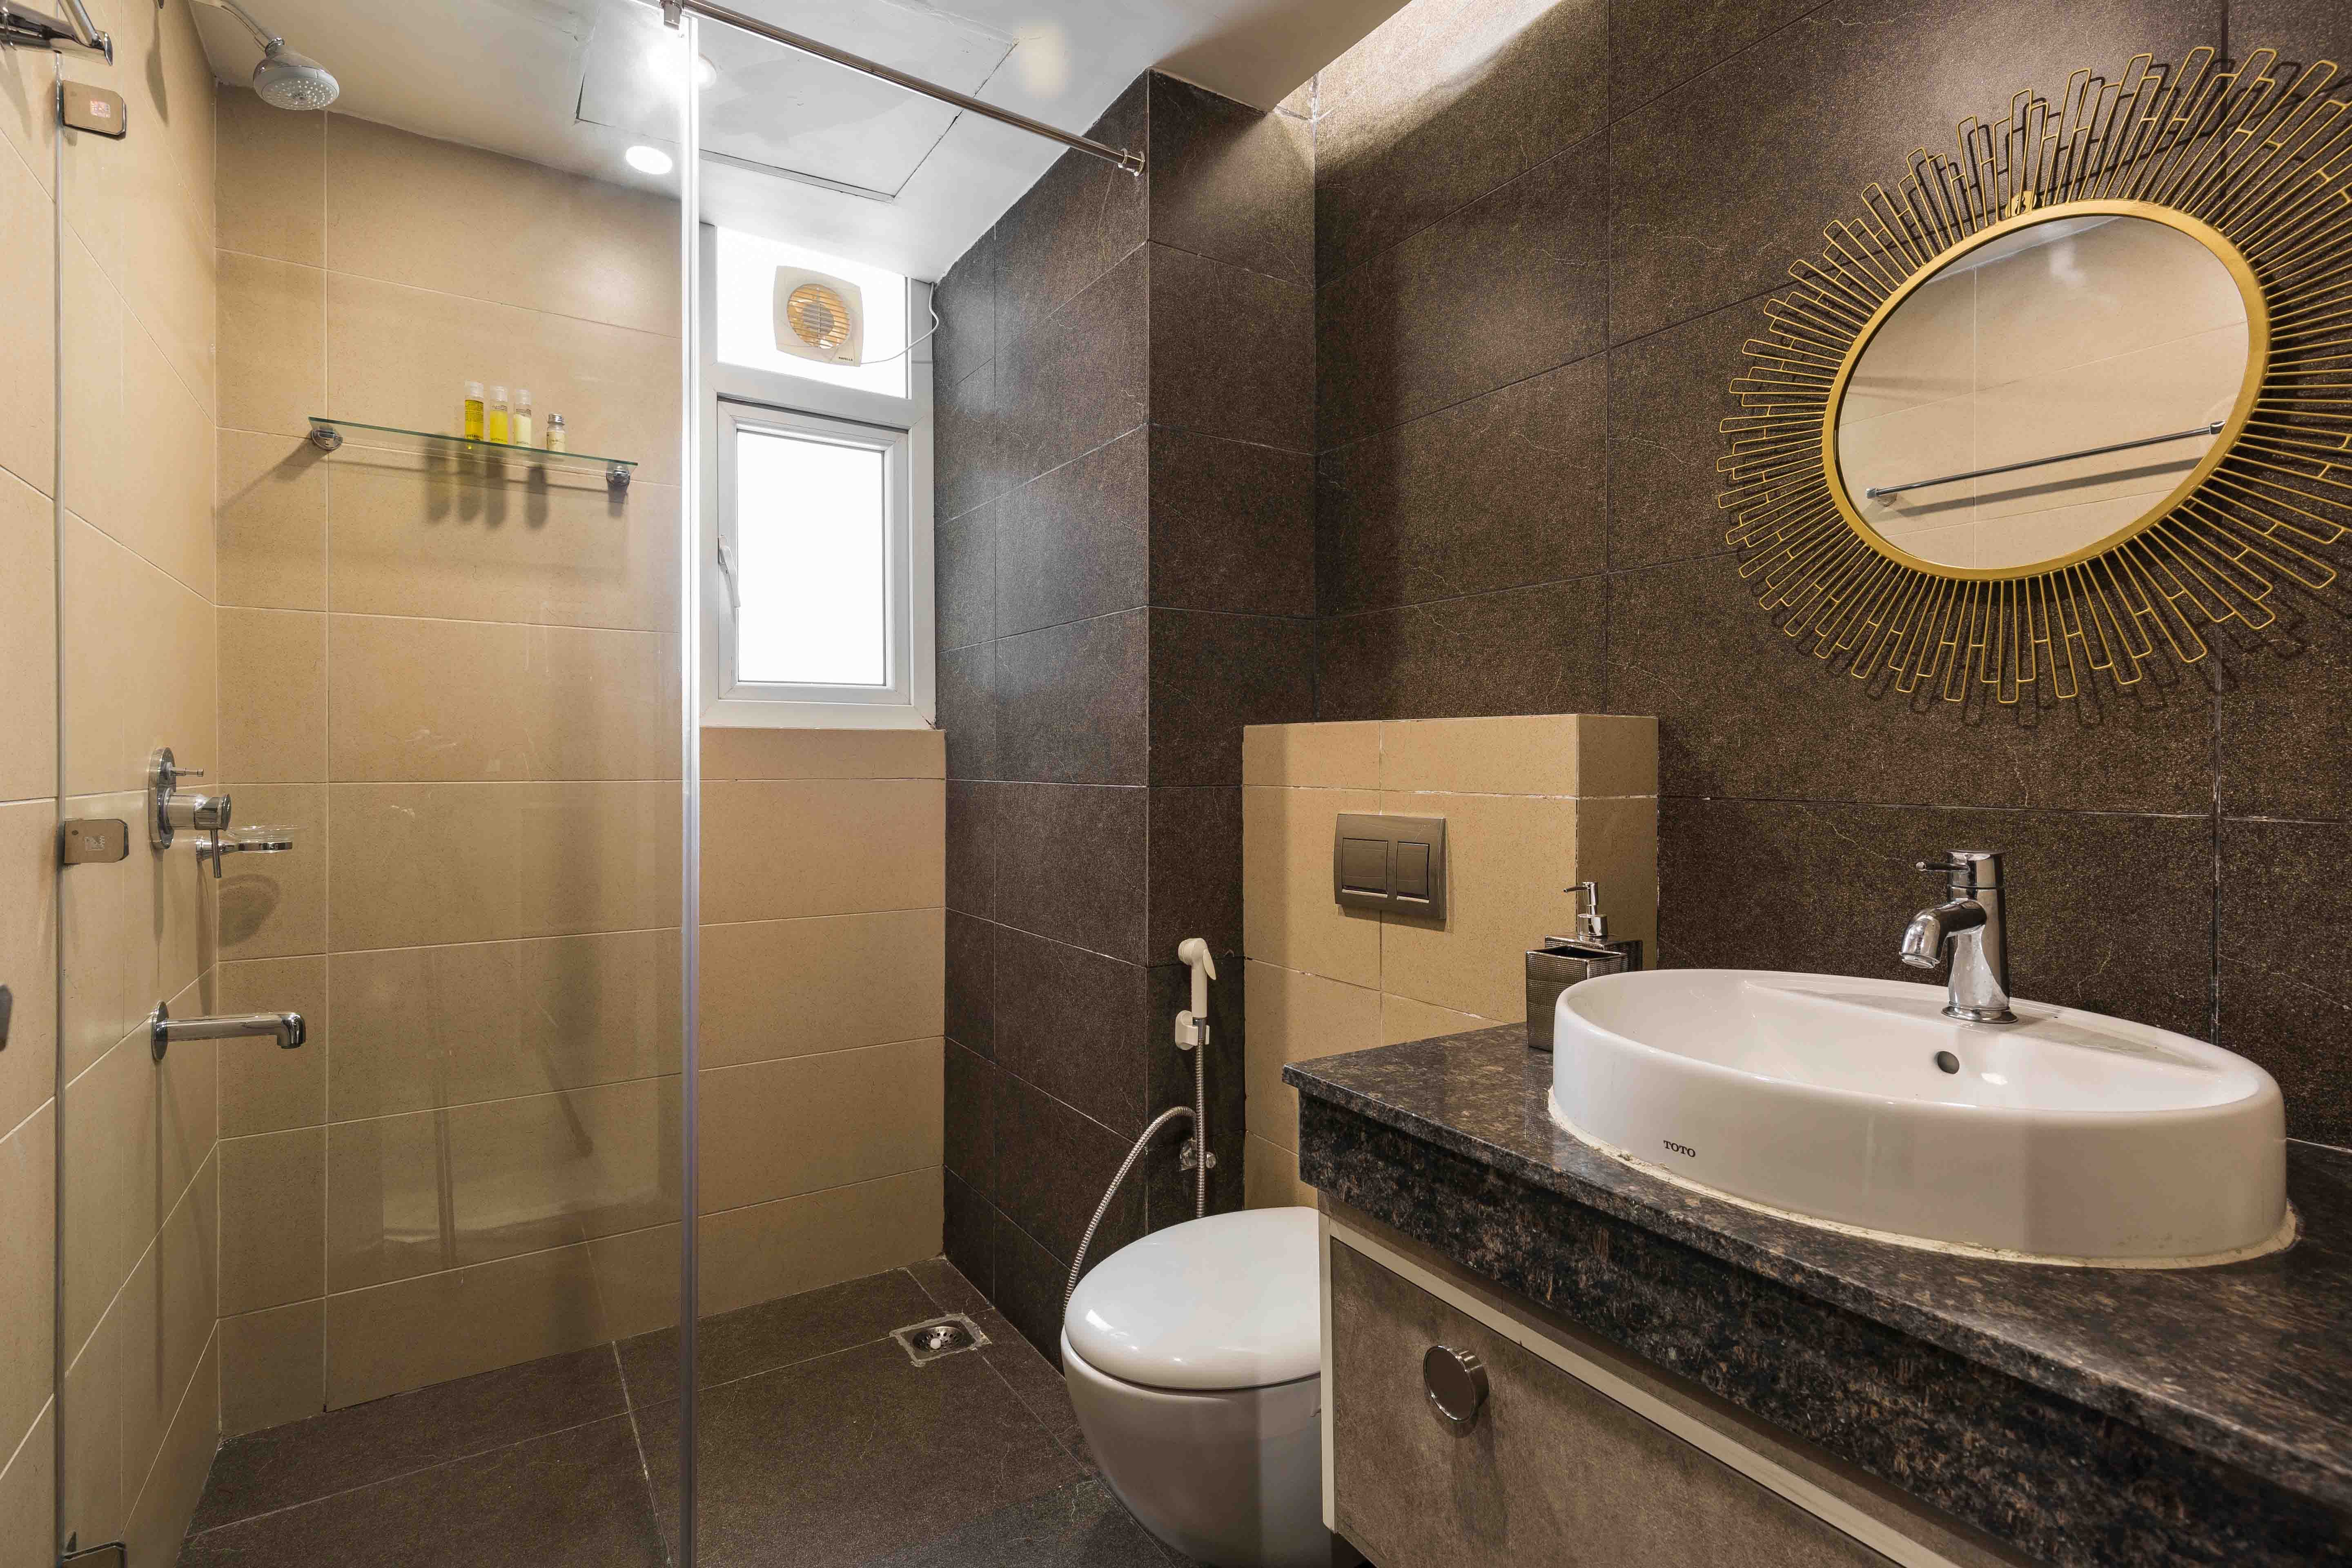 Contemporary Bathroom Design With A Granite Countertop